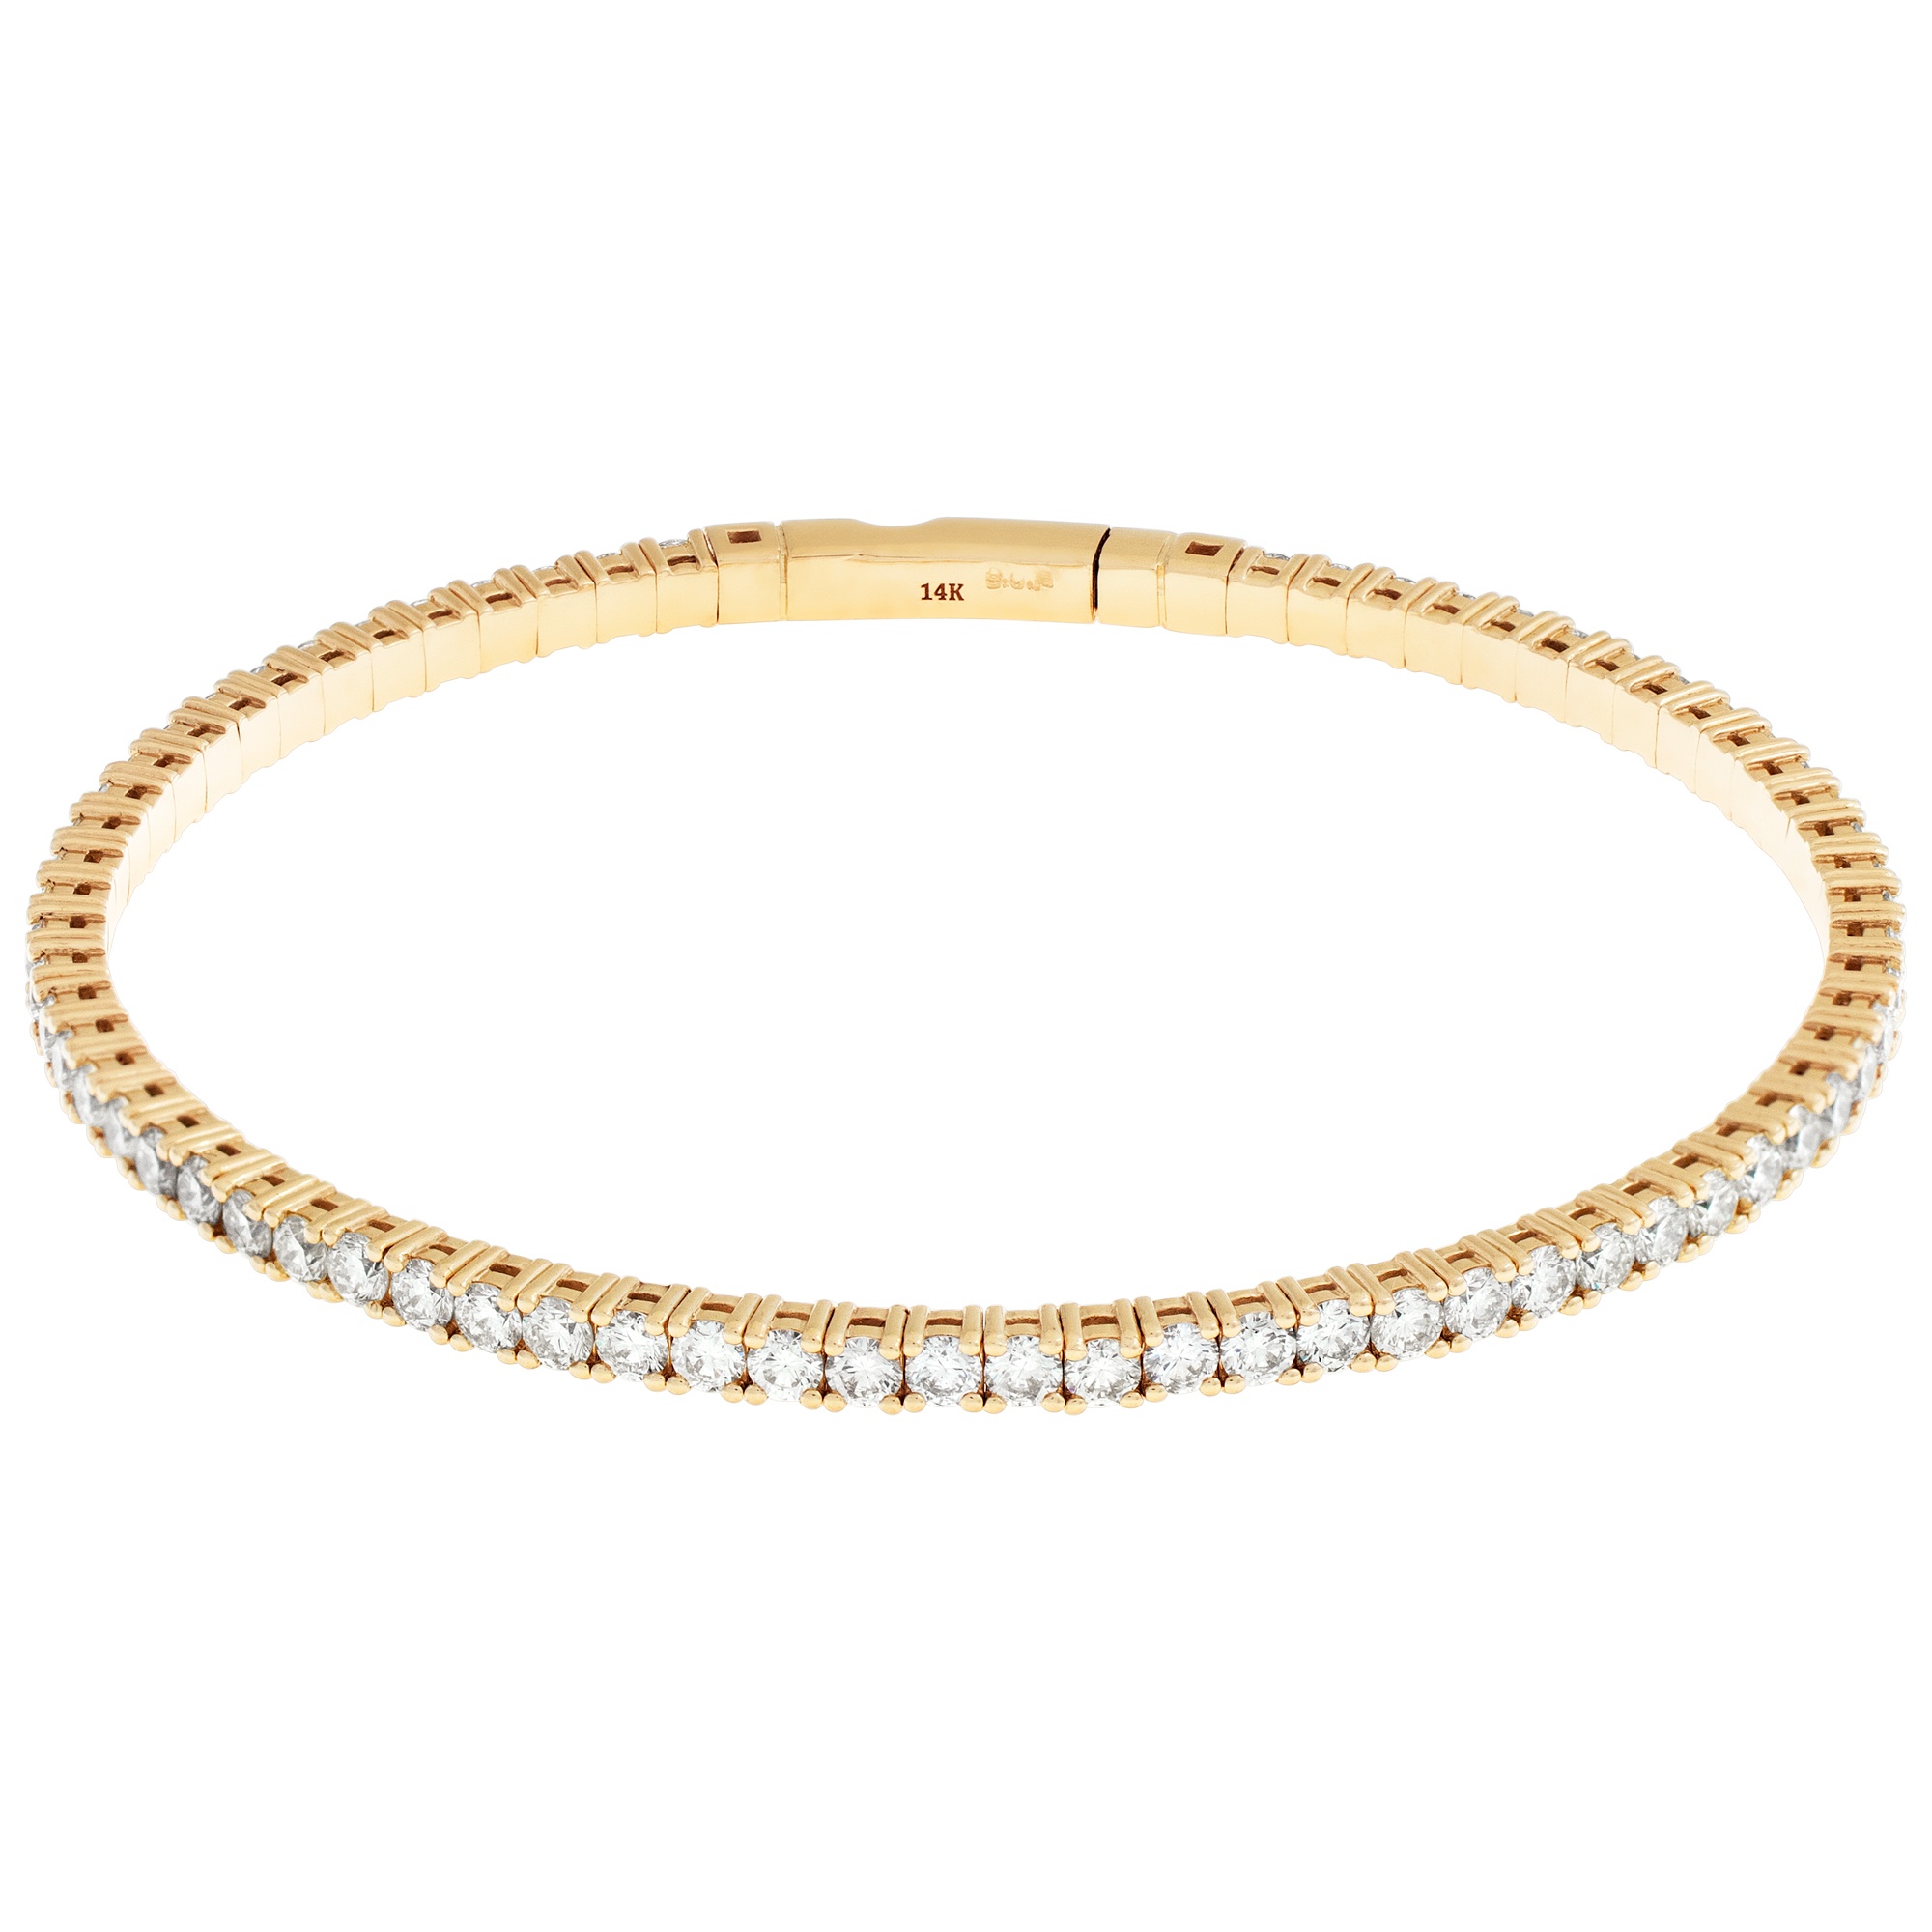 Diamond Bracelet in 14k gold with 3.95 carats in diamonds